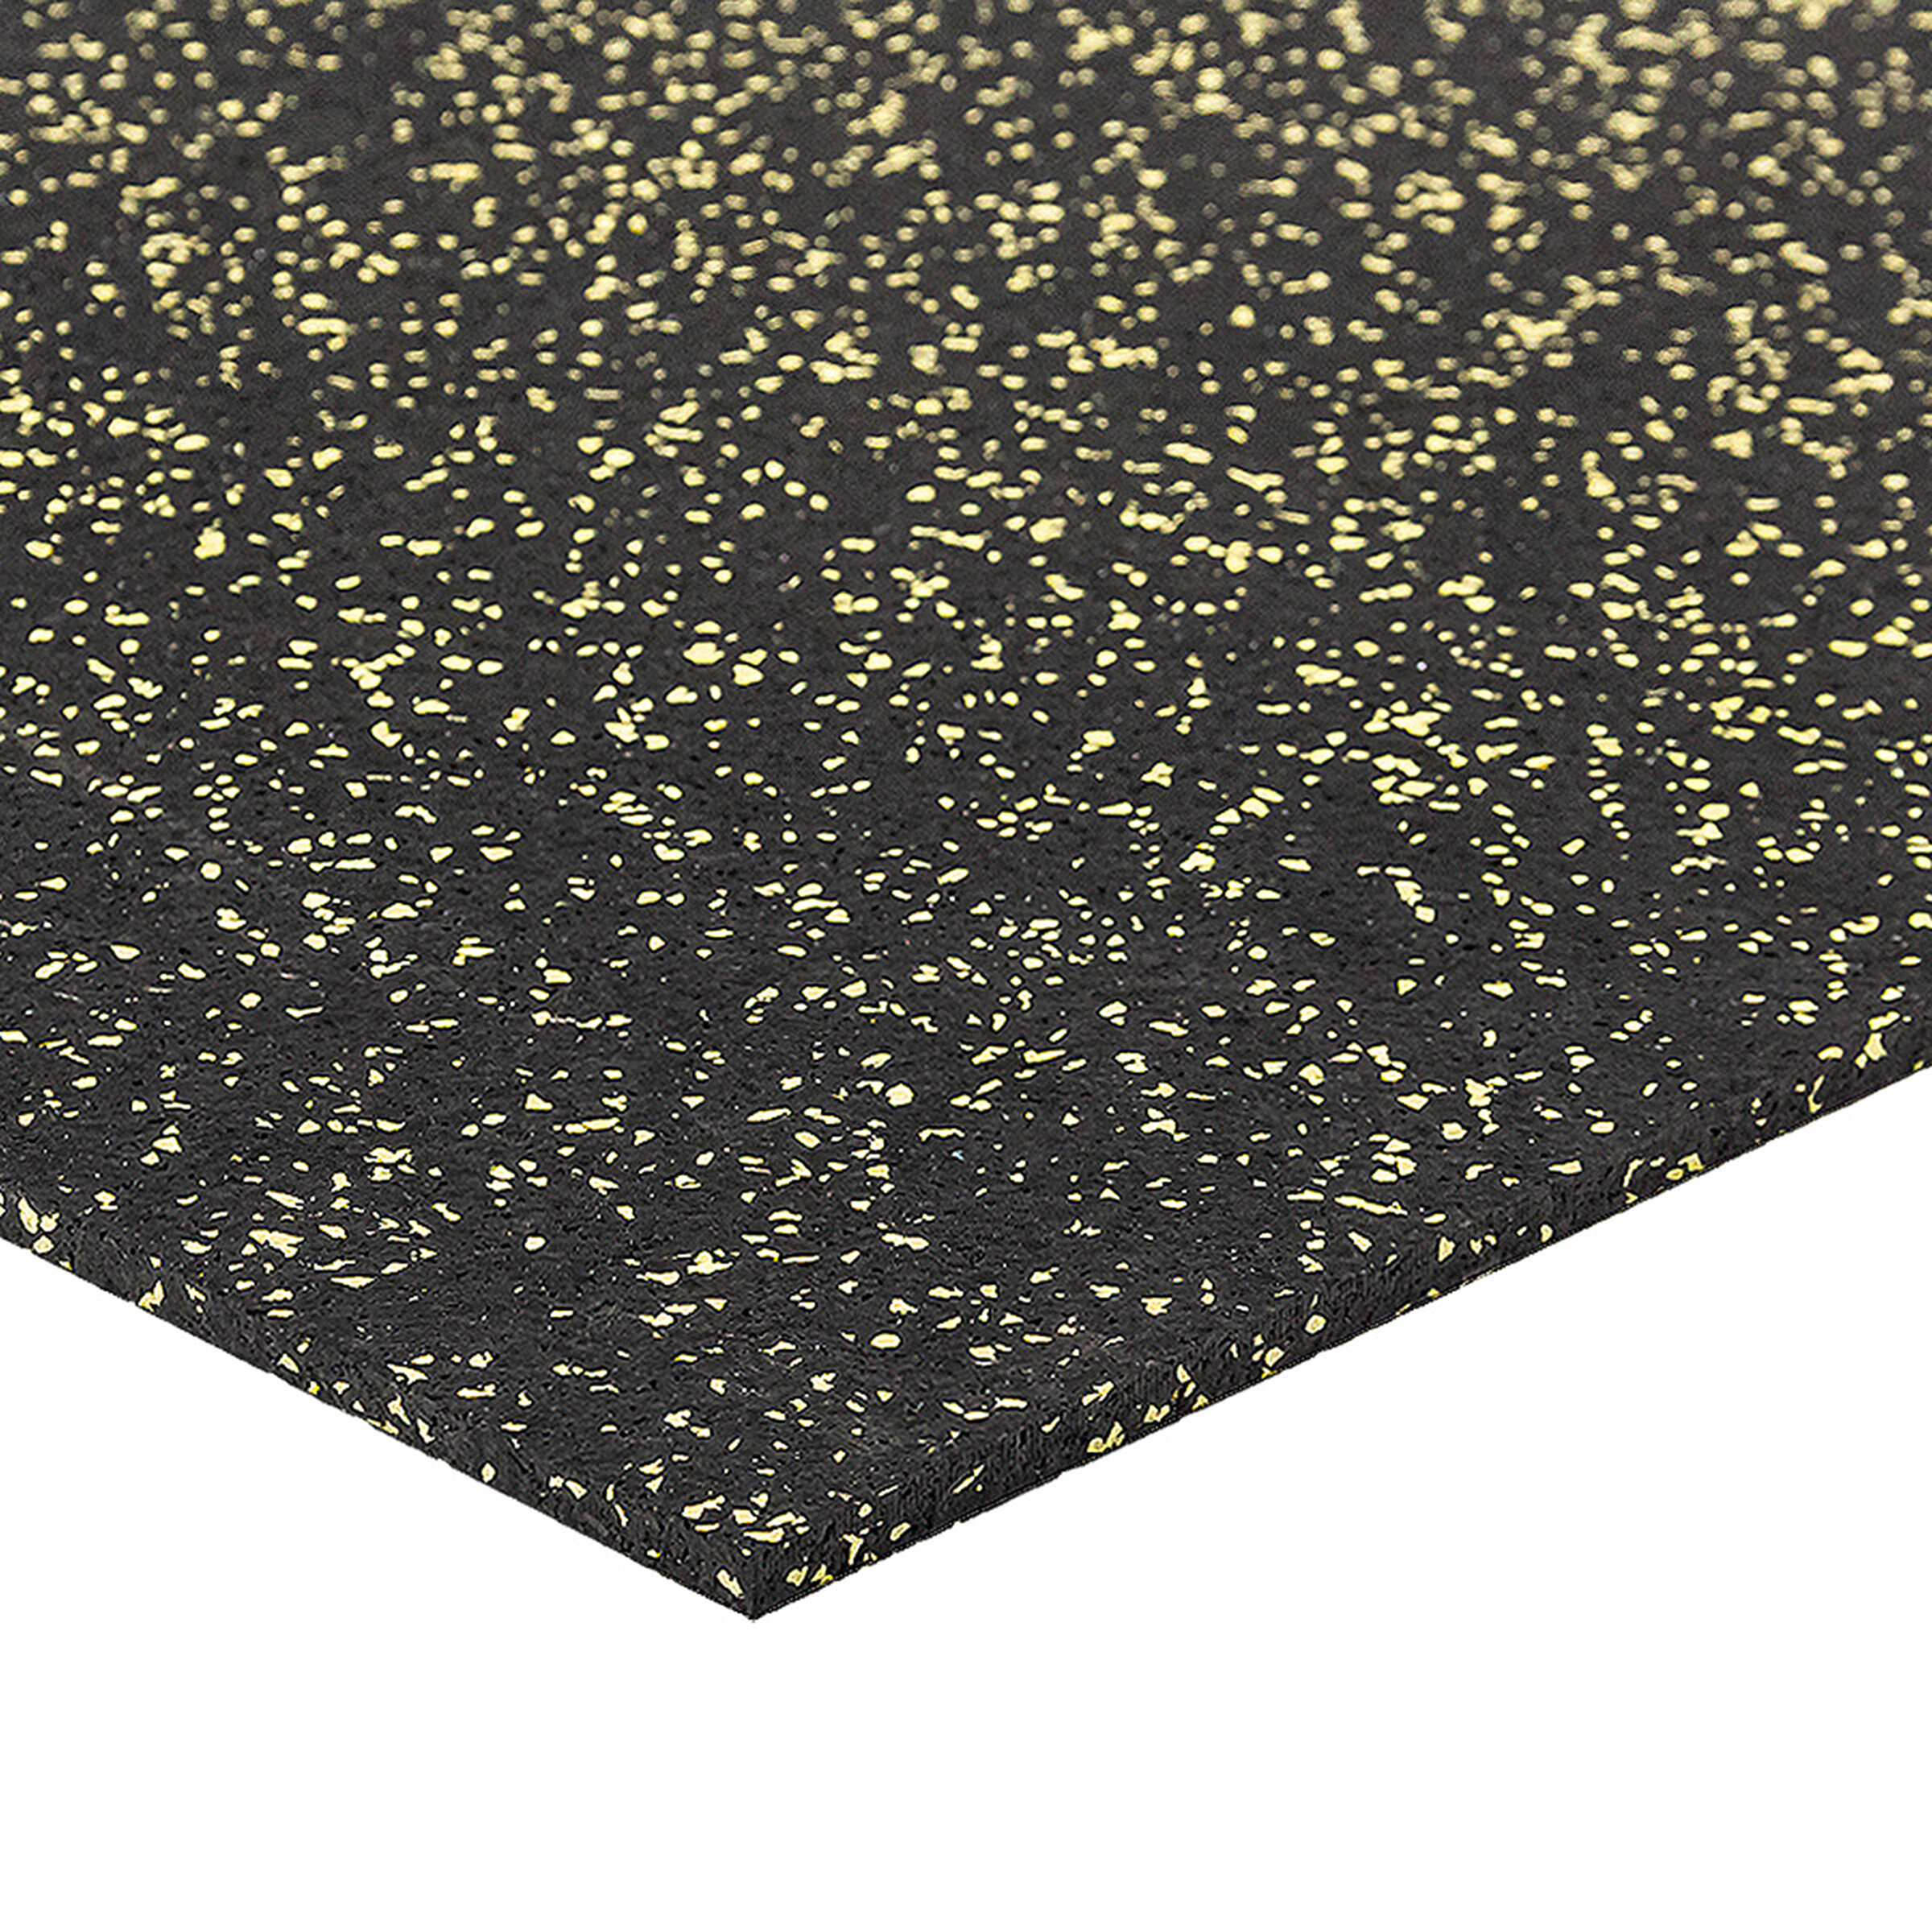 Černo-žlutá podlahová guma (puzzle - střed) FLOMA FitFlo SF1050 - délka 100 cm, šířka 100 cm, výška 0,8 cm